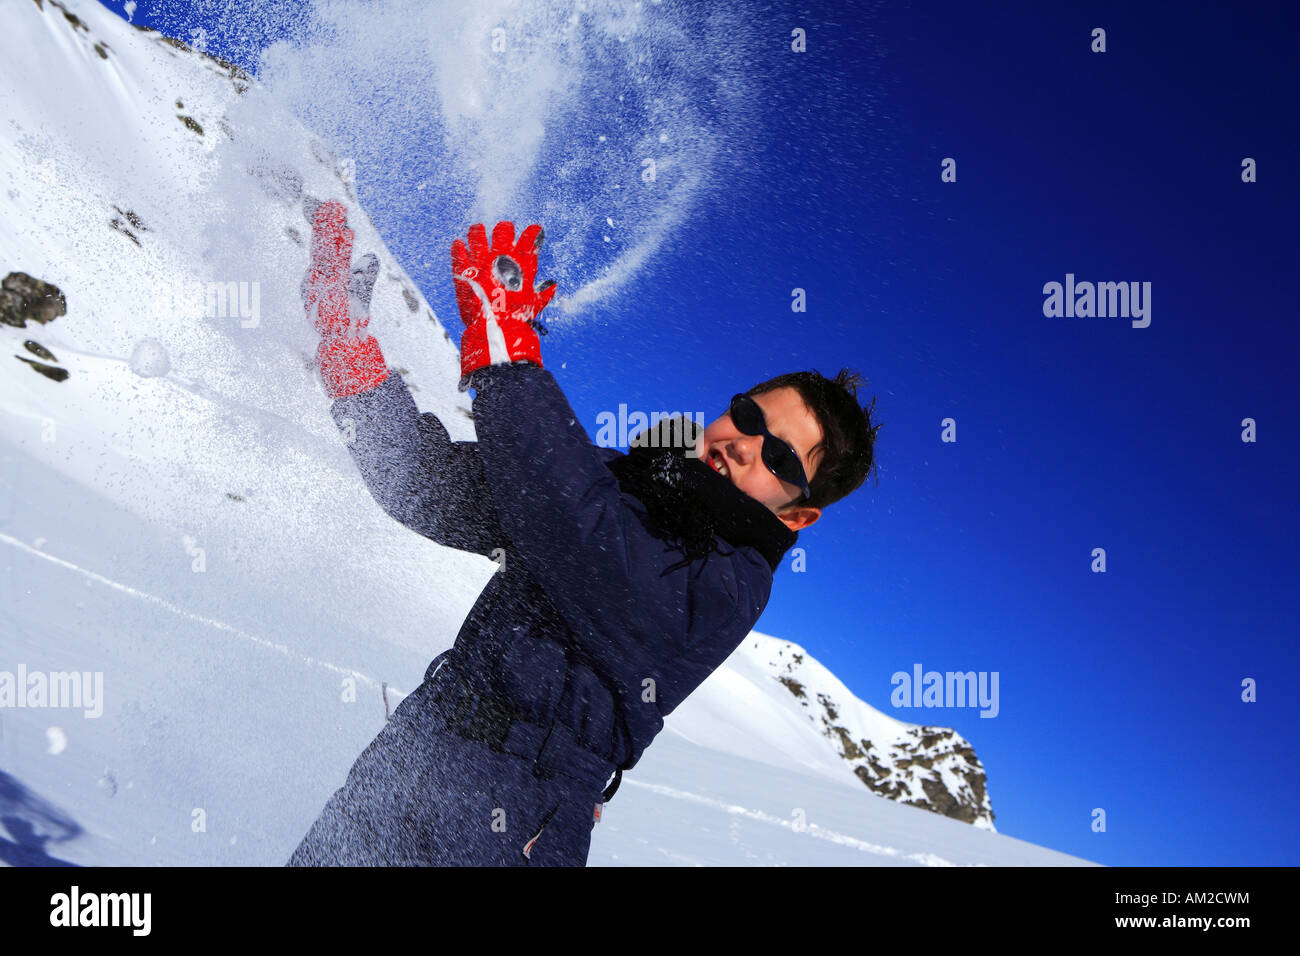 France, Savoie, Meribel, enfant au ski Stock Photo